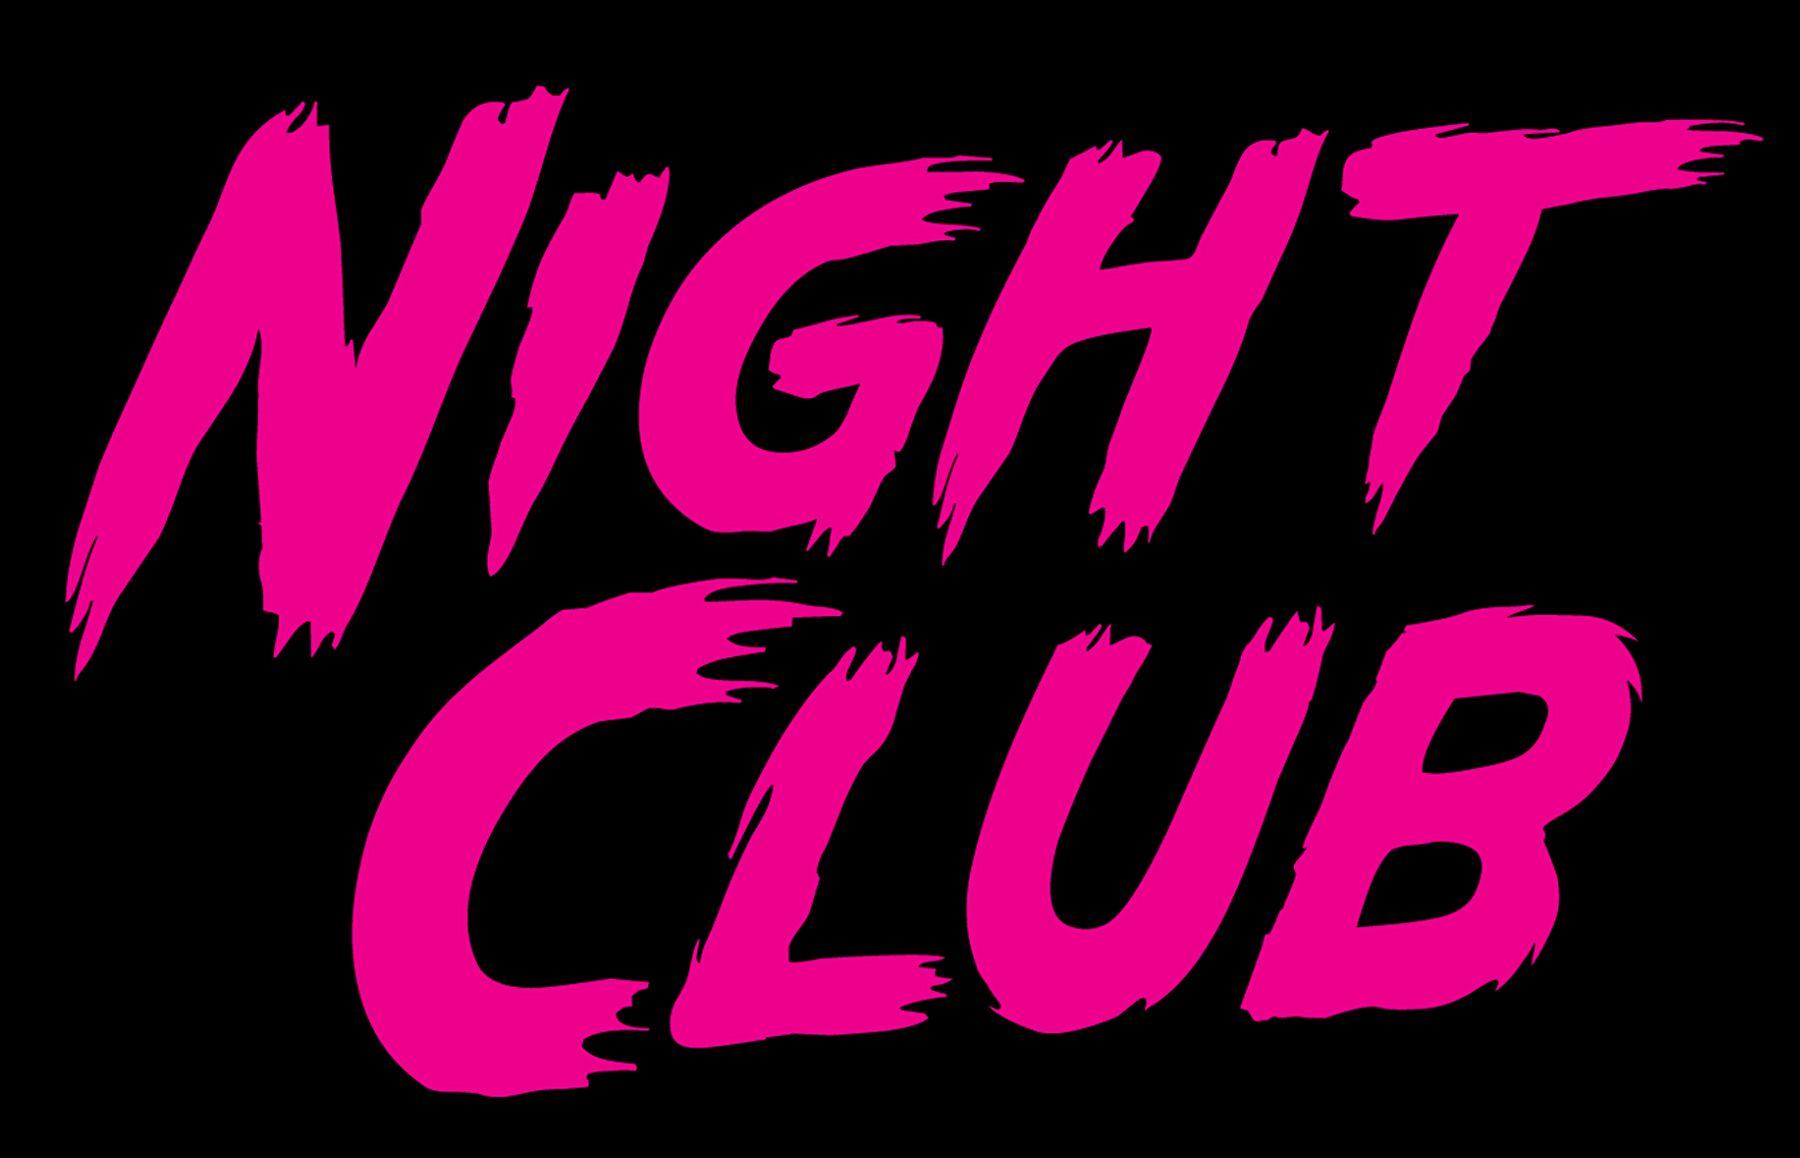 Night Club Logo - Image - Night Club Logo.jpg | Logopedia | FANDOM powered by Wikia